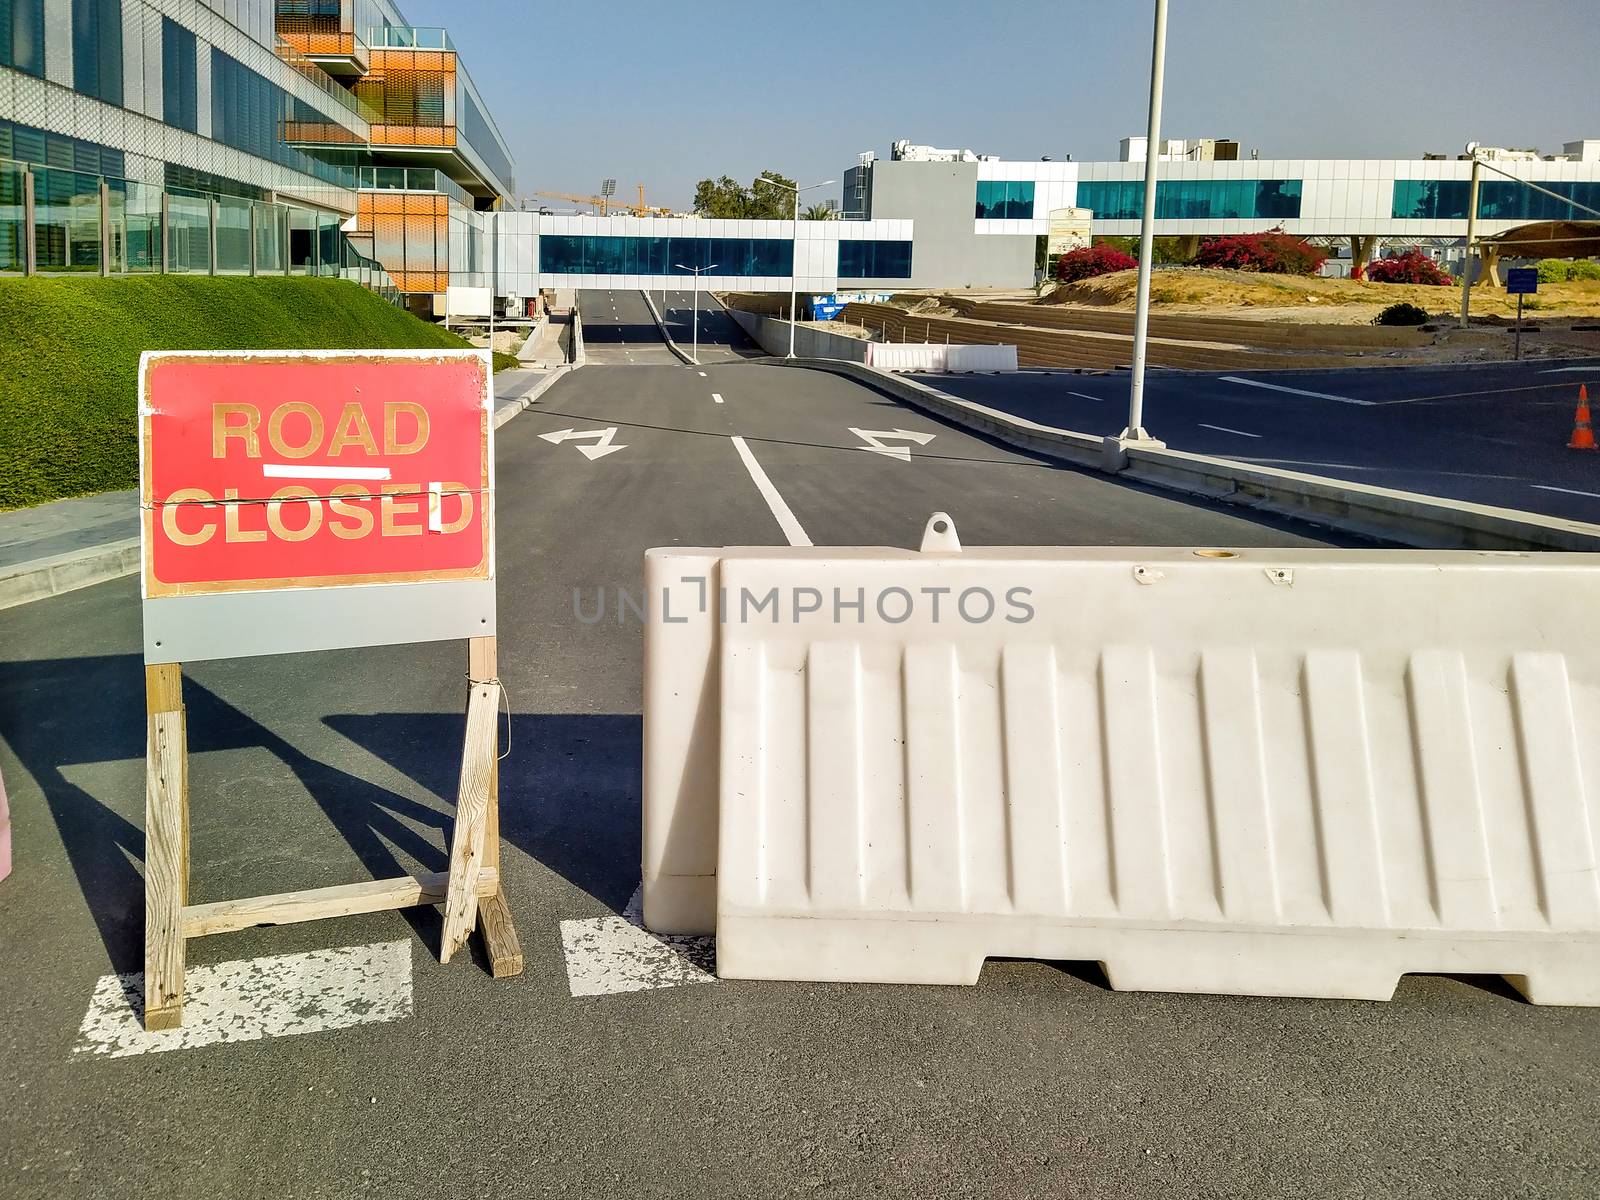 Dubai, UAE - CIRCA 2020: Road closer sign and road blockade near a hospital. Concept of road diversion. by dugulan